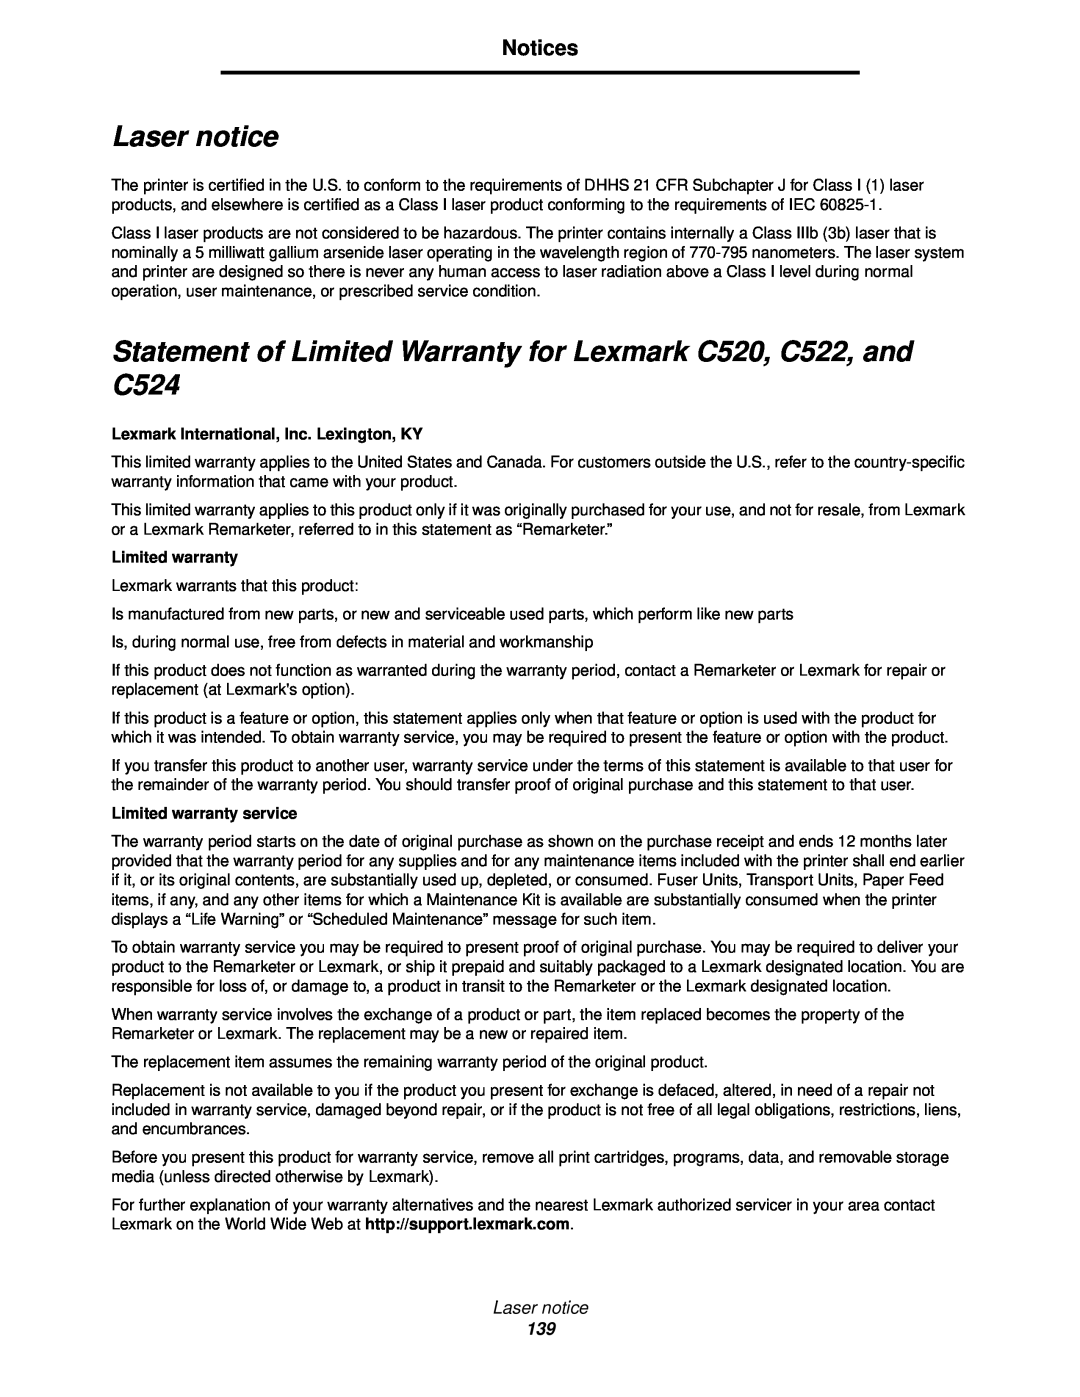 Lexmark manual Laser notice, Statement of Limited Warranty for Lexmark C520, C522, and C524, Limited warranty, Notices 